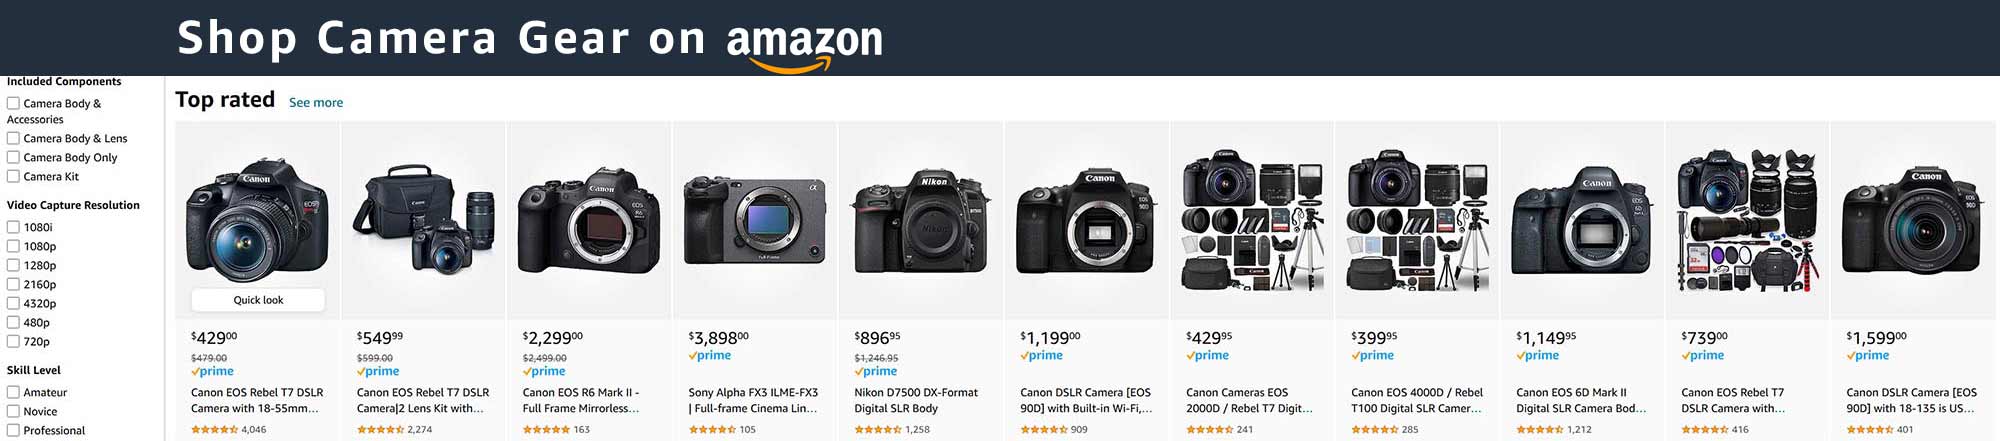 shop camera gear on amazon prime